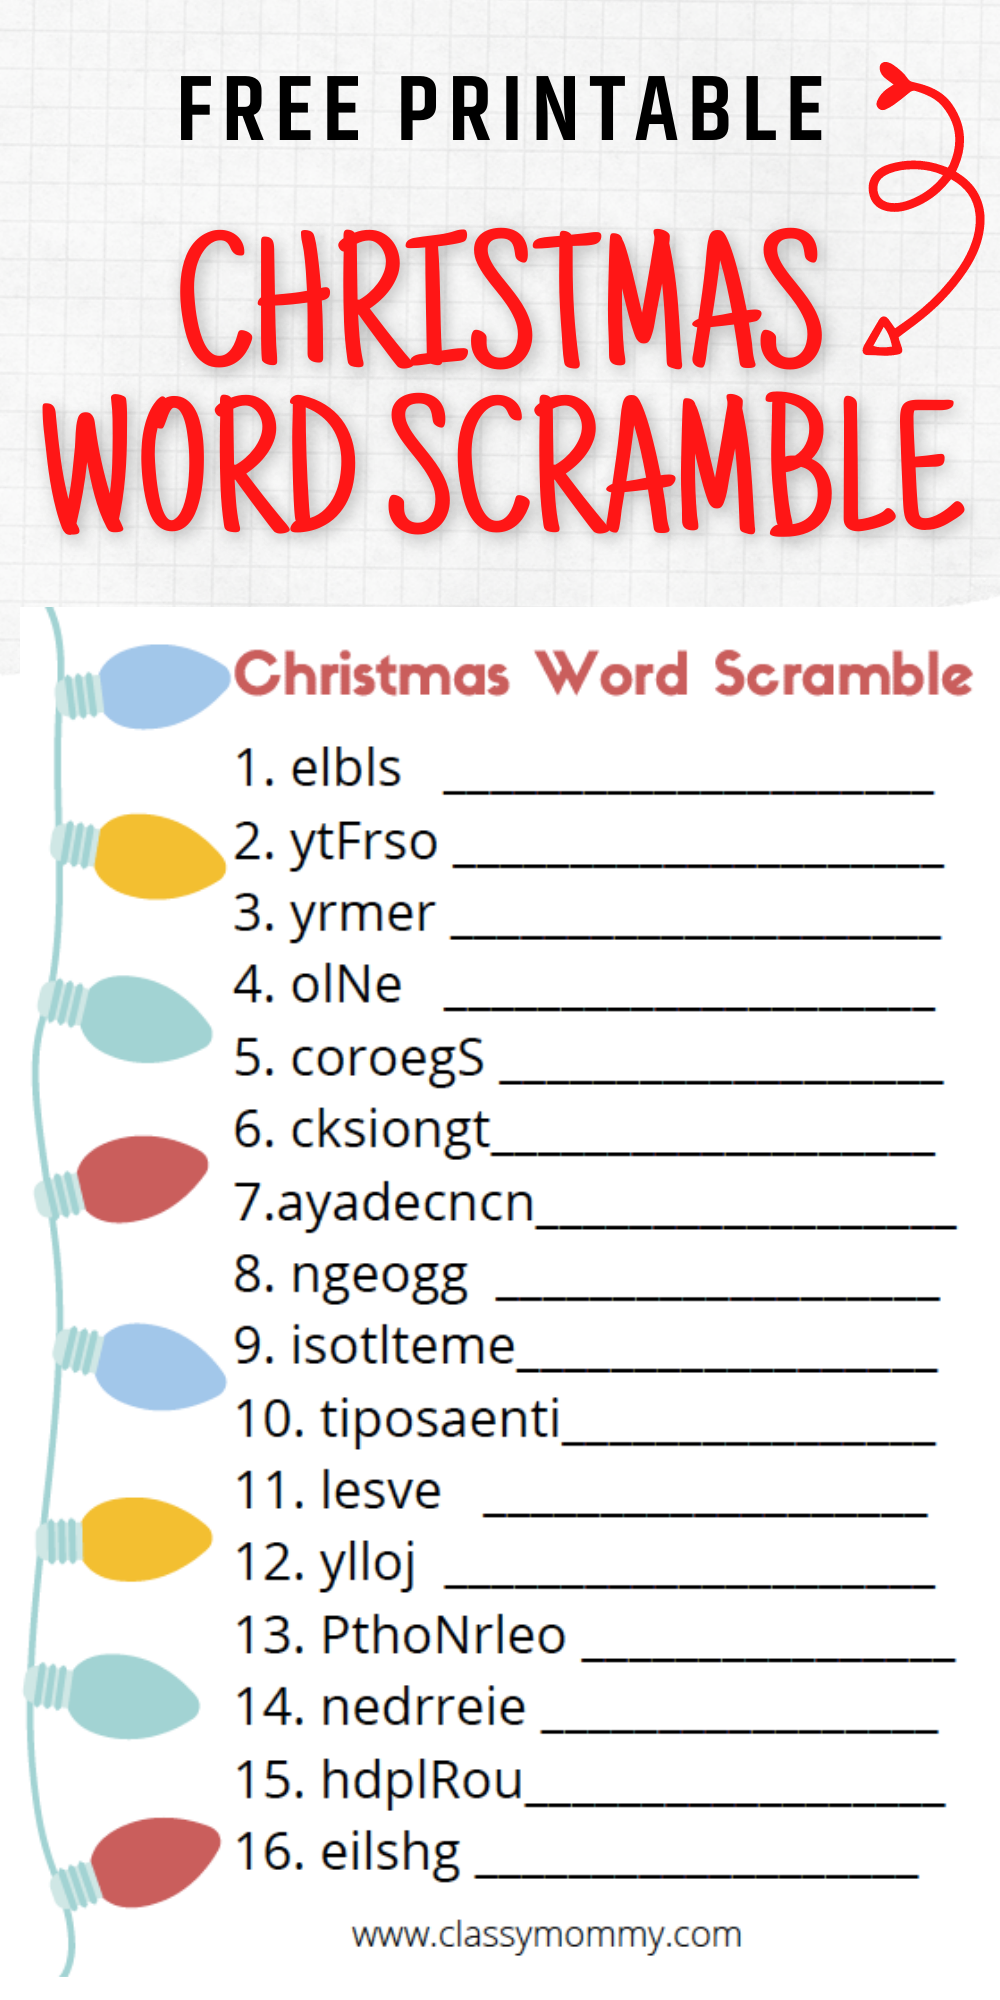 free-printable-winter-word-scramble-classy-mommy